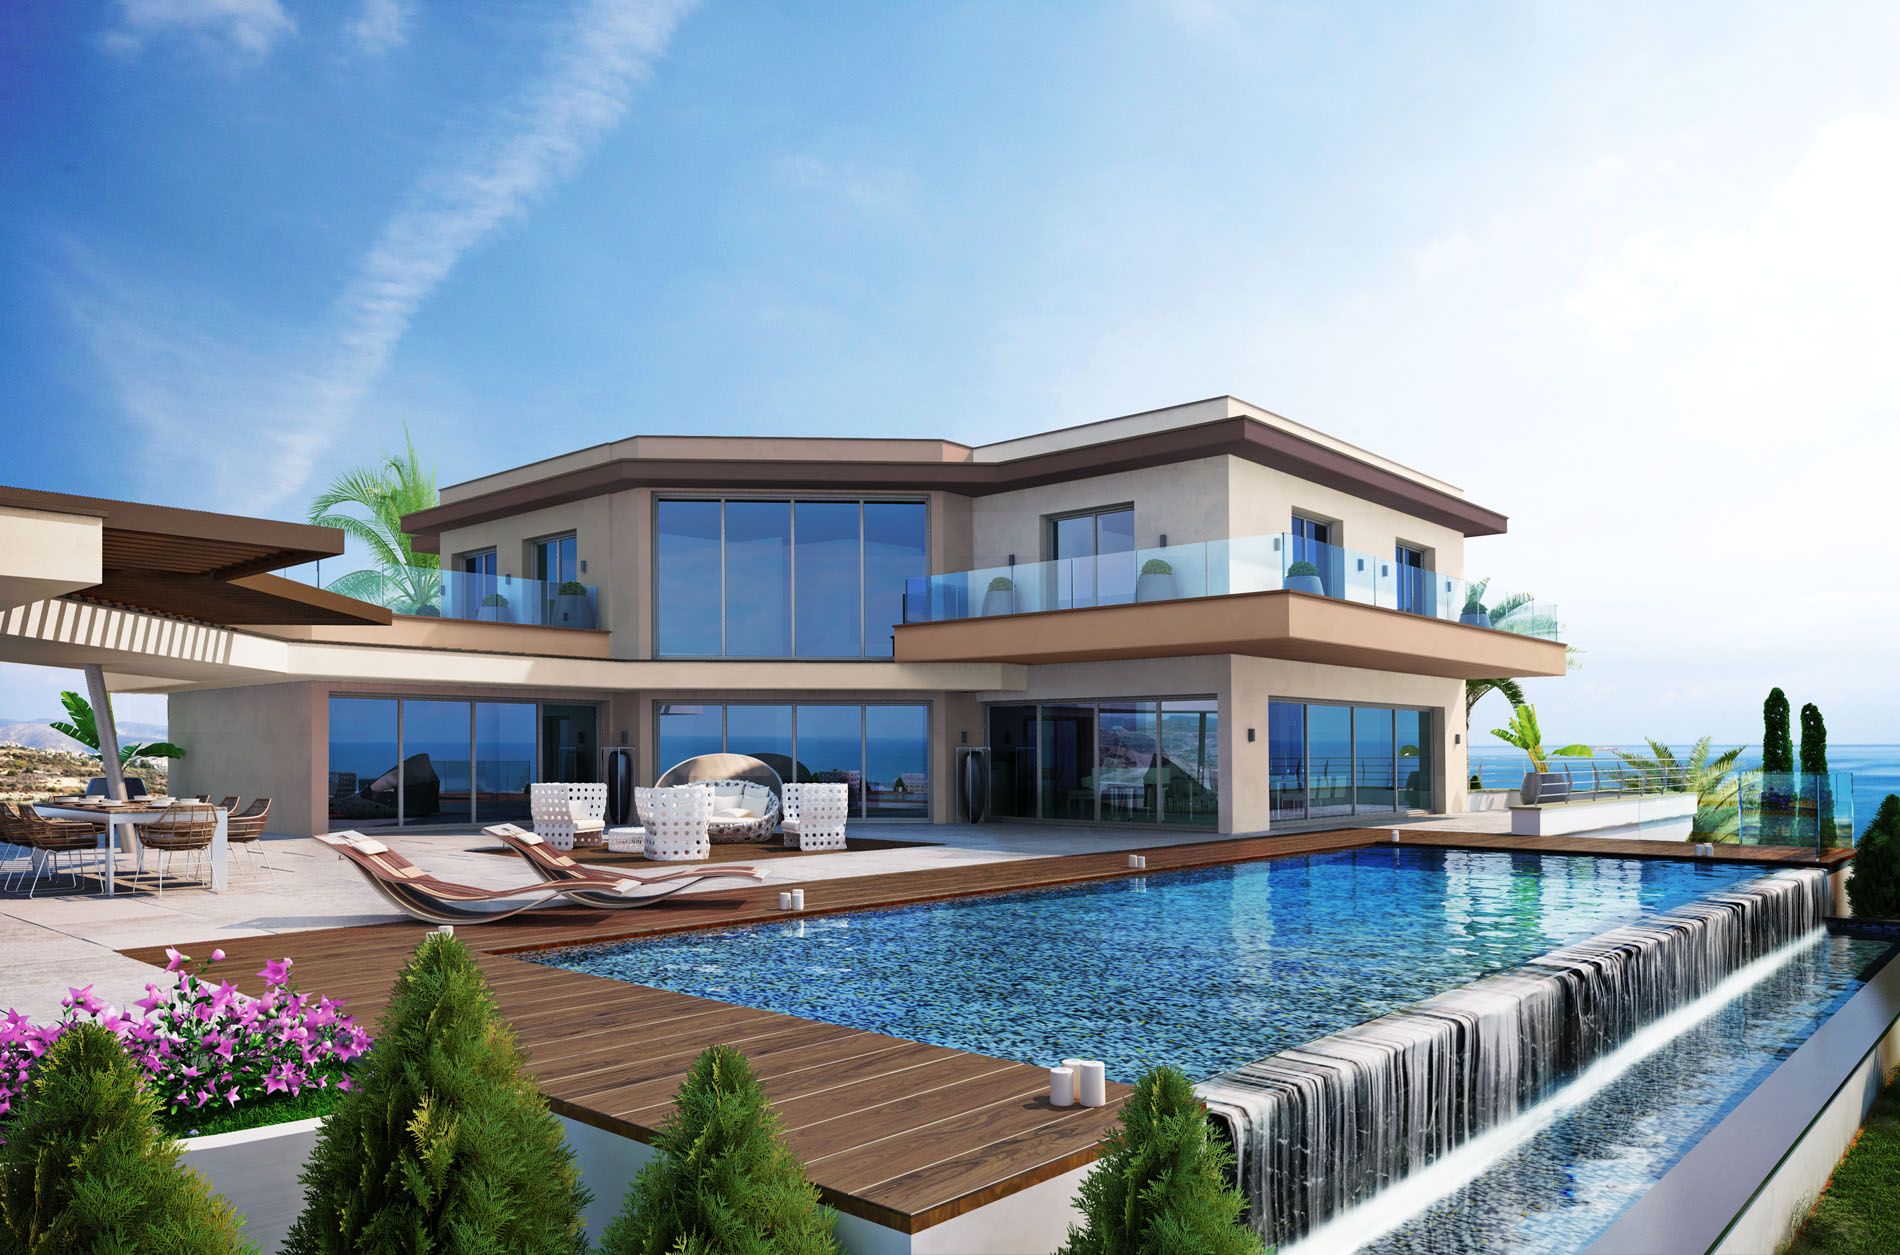 Best House for Selling In Dubai